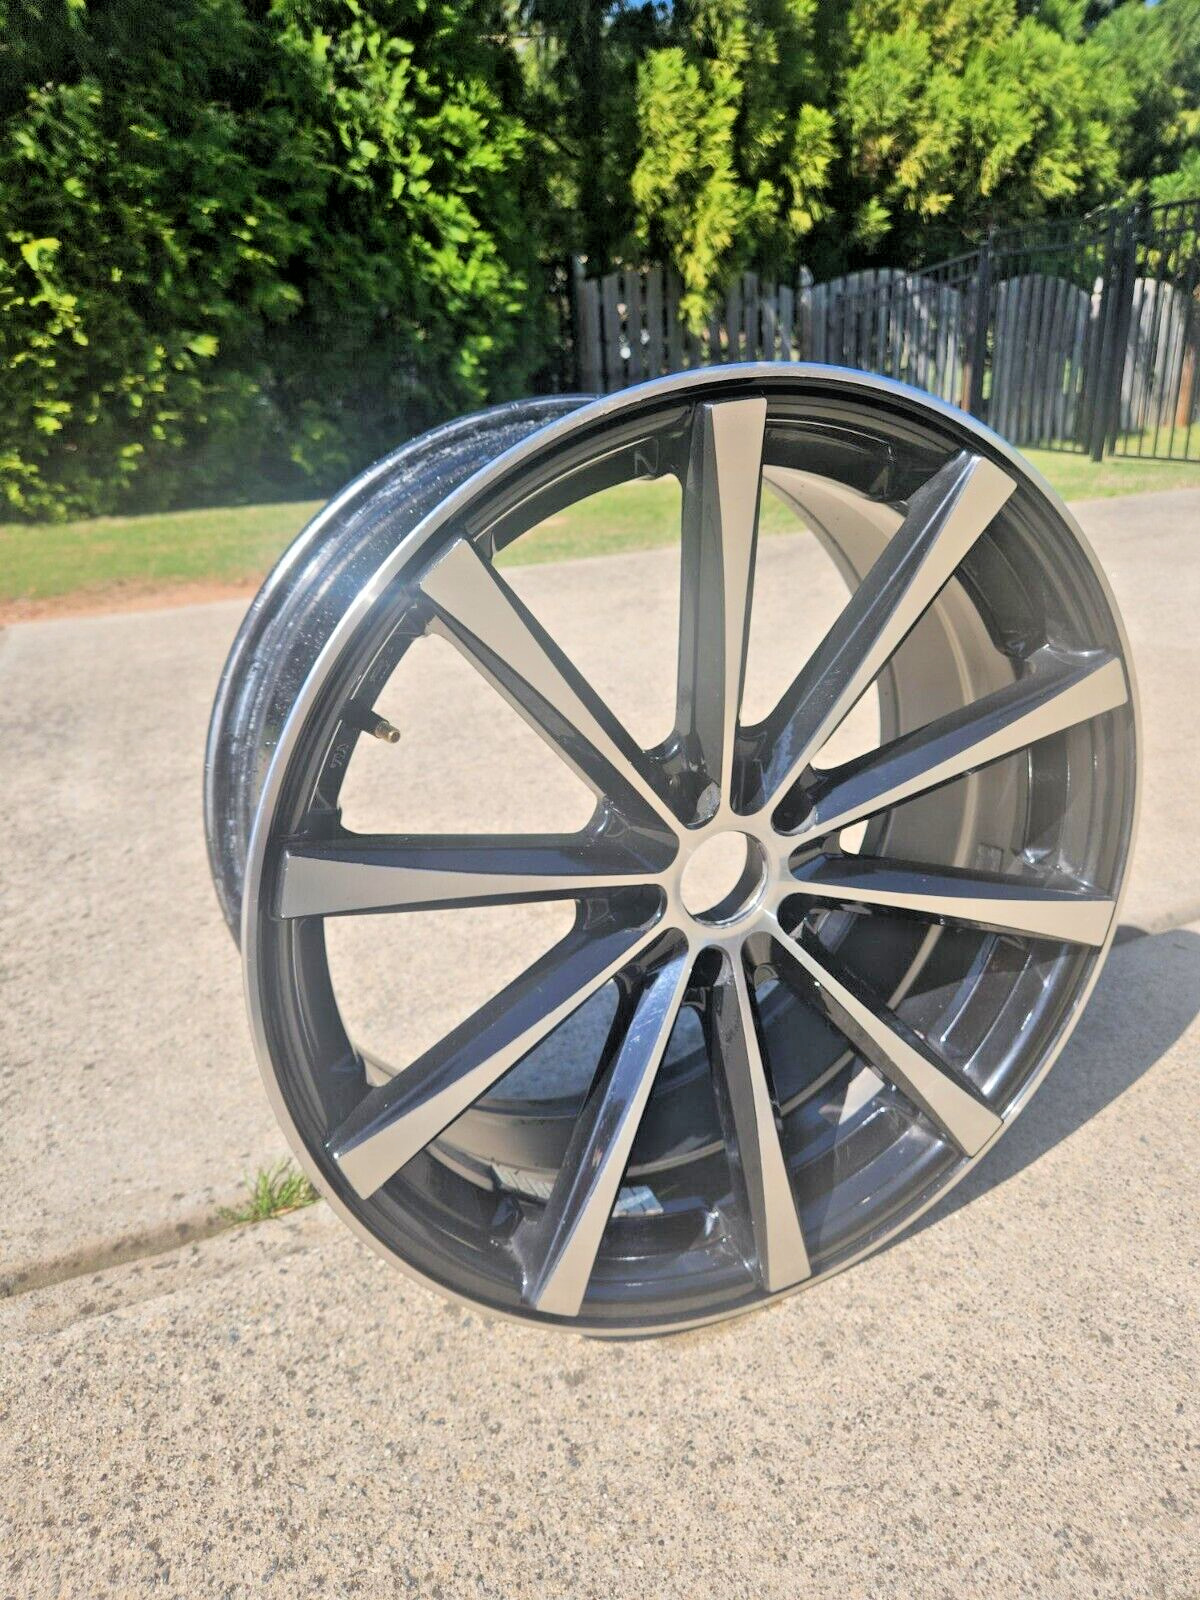 Curva Concepts C10N wheels rims 20 x 8.5      5 x 114.3 mm Bolt pattern